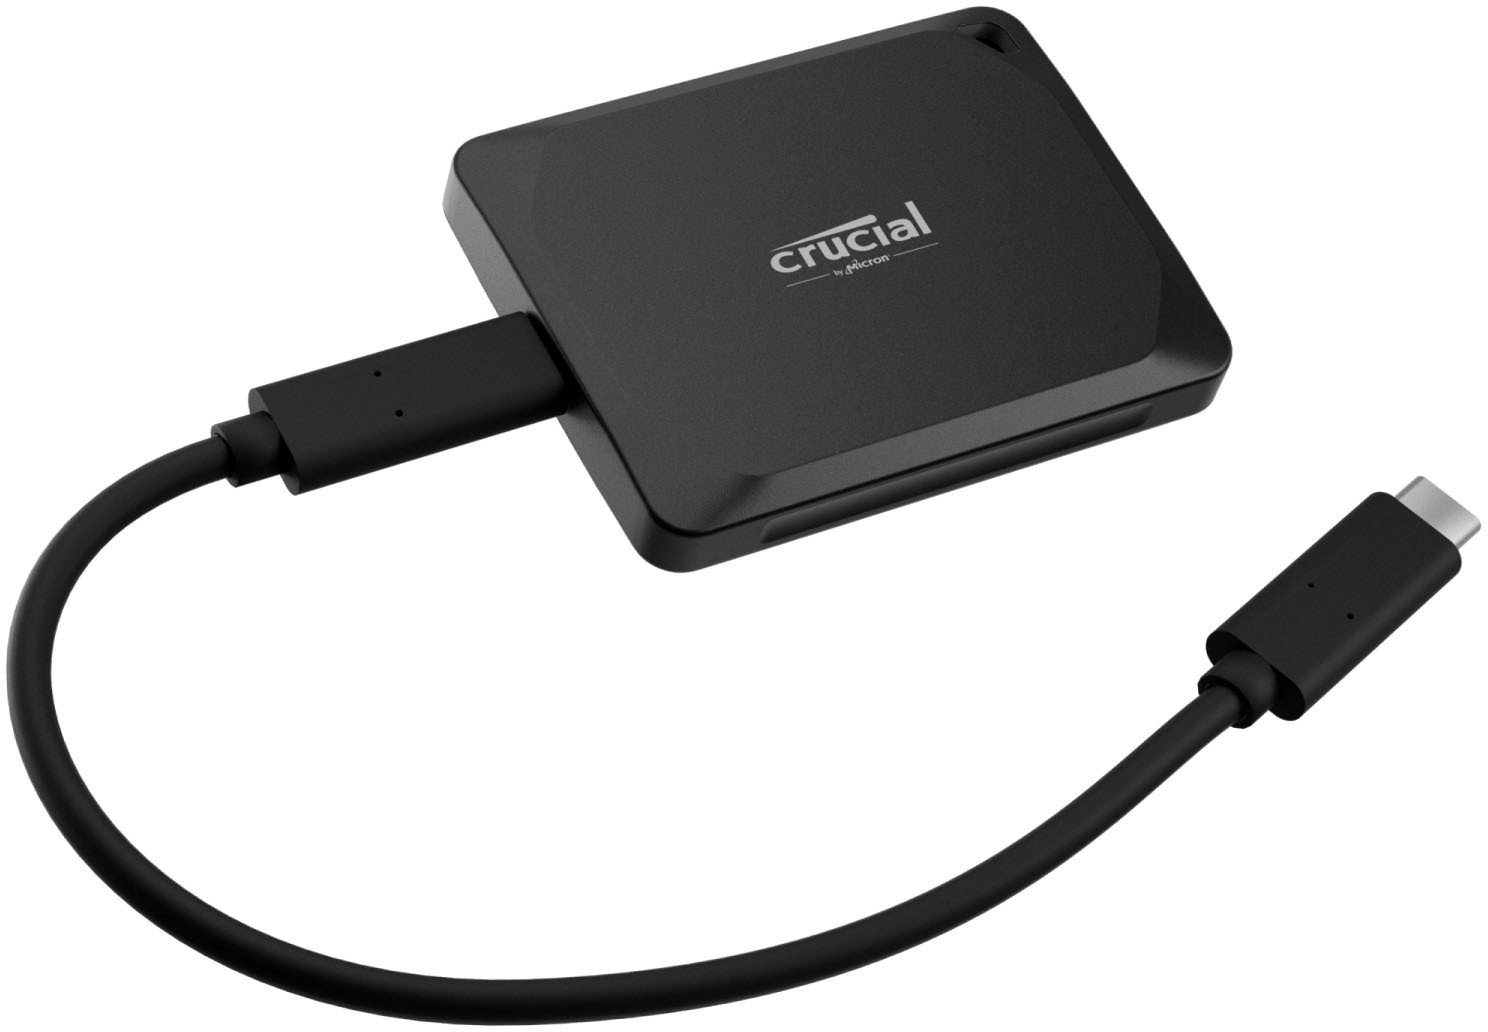 Crucial X10 Pro 4TB USB-C External SSD Black CT4000X10PROSSD9